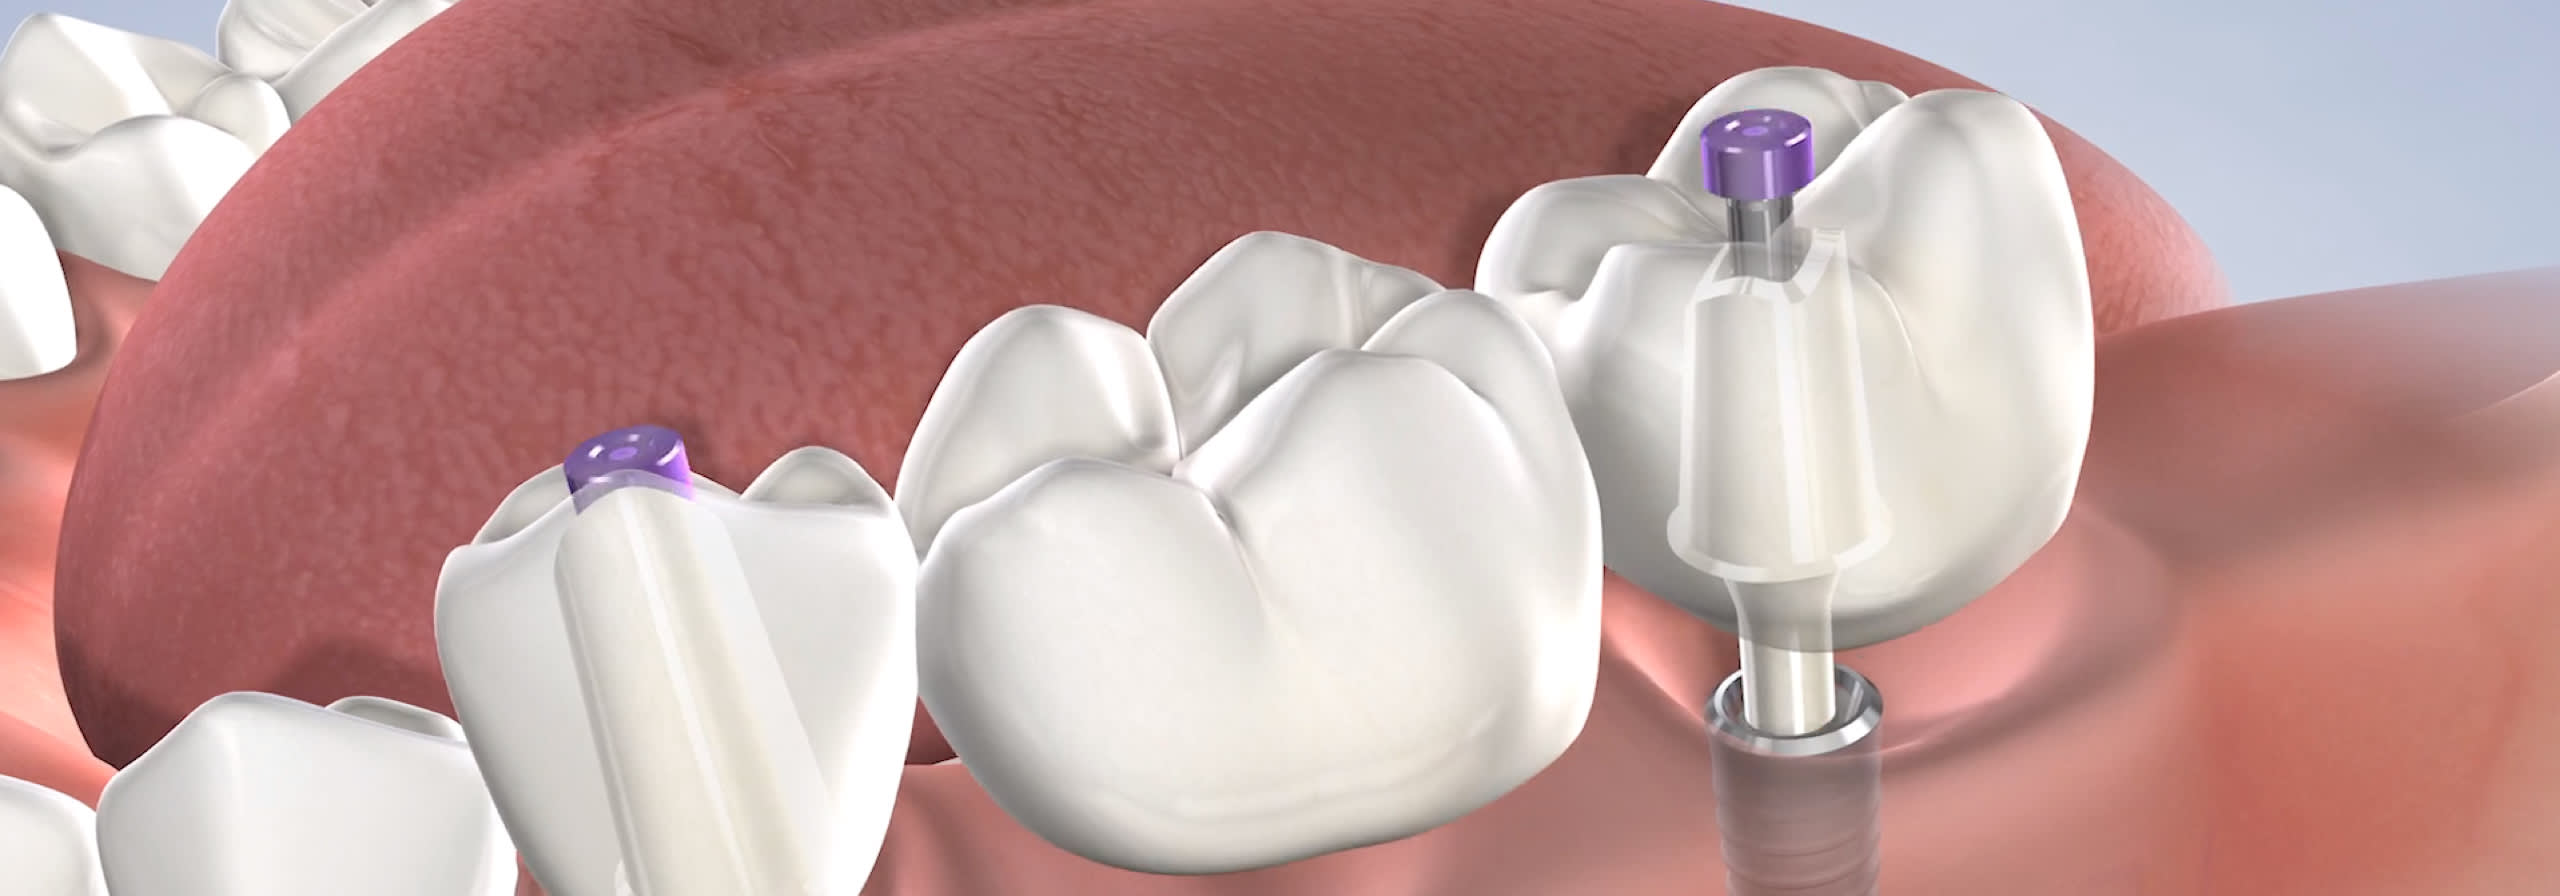 Benefits of Dental Implants in Oklahoma City, OK